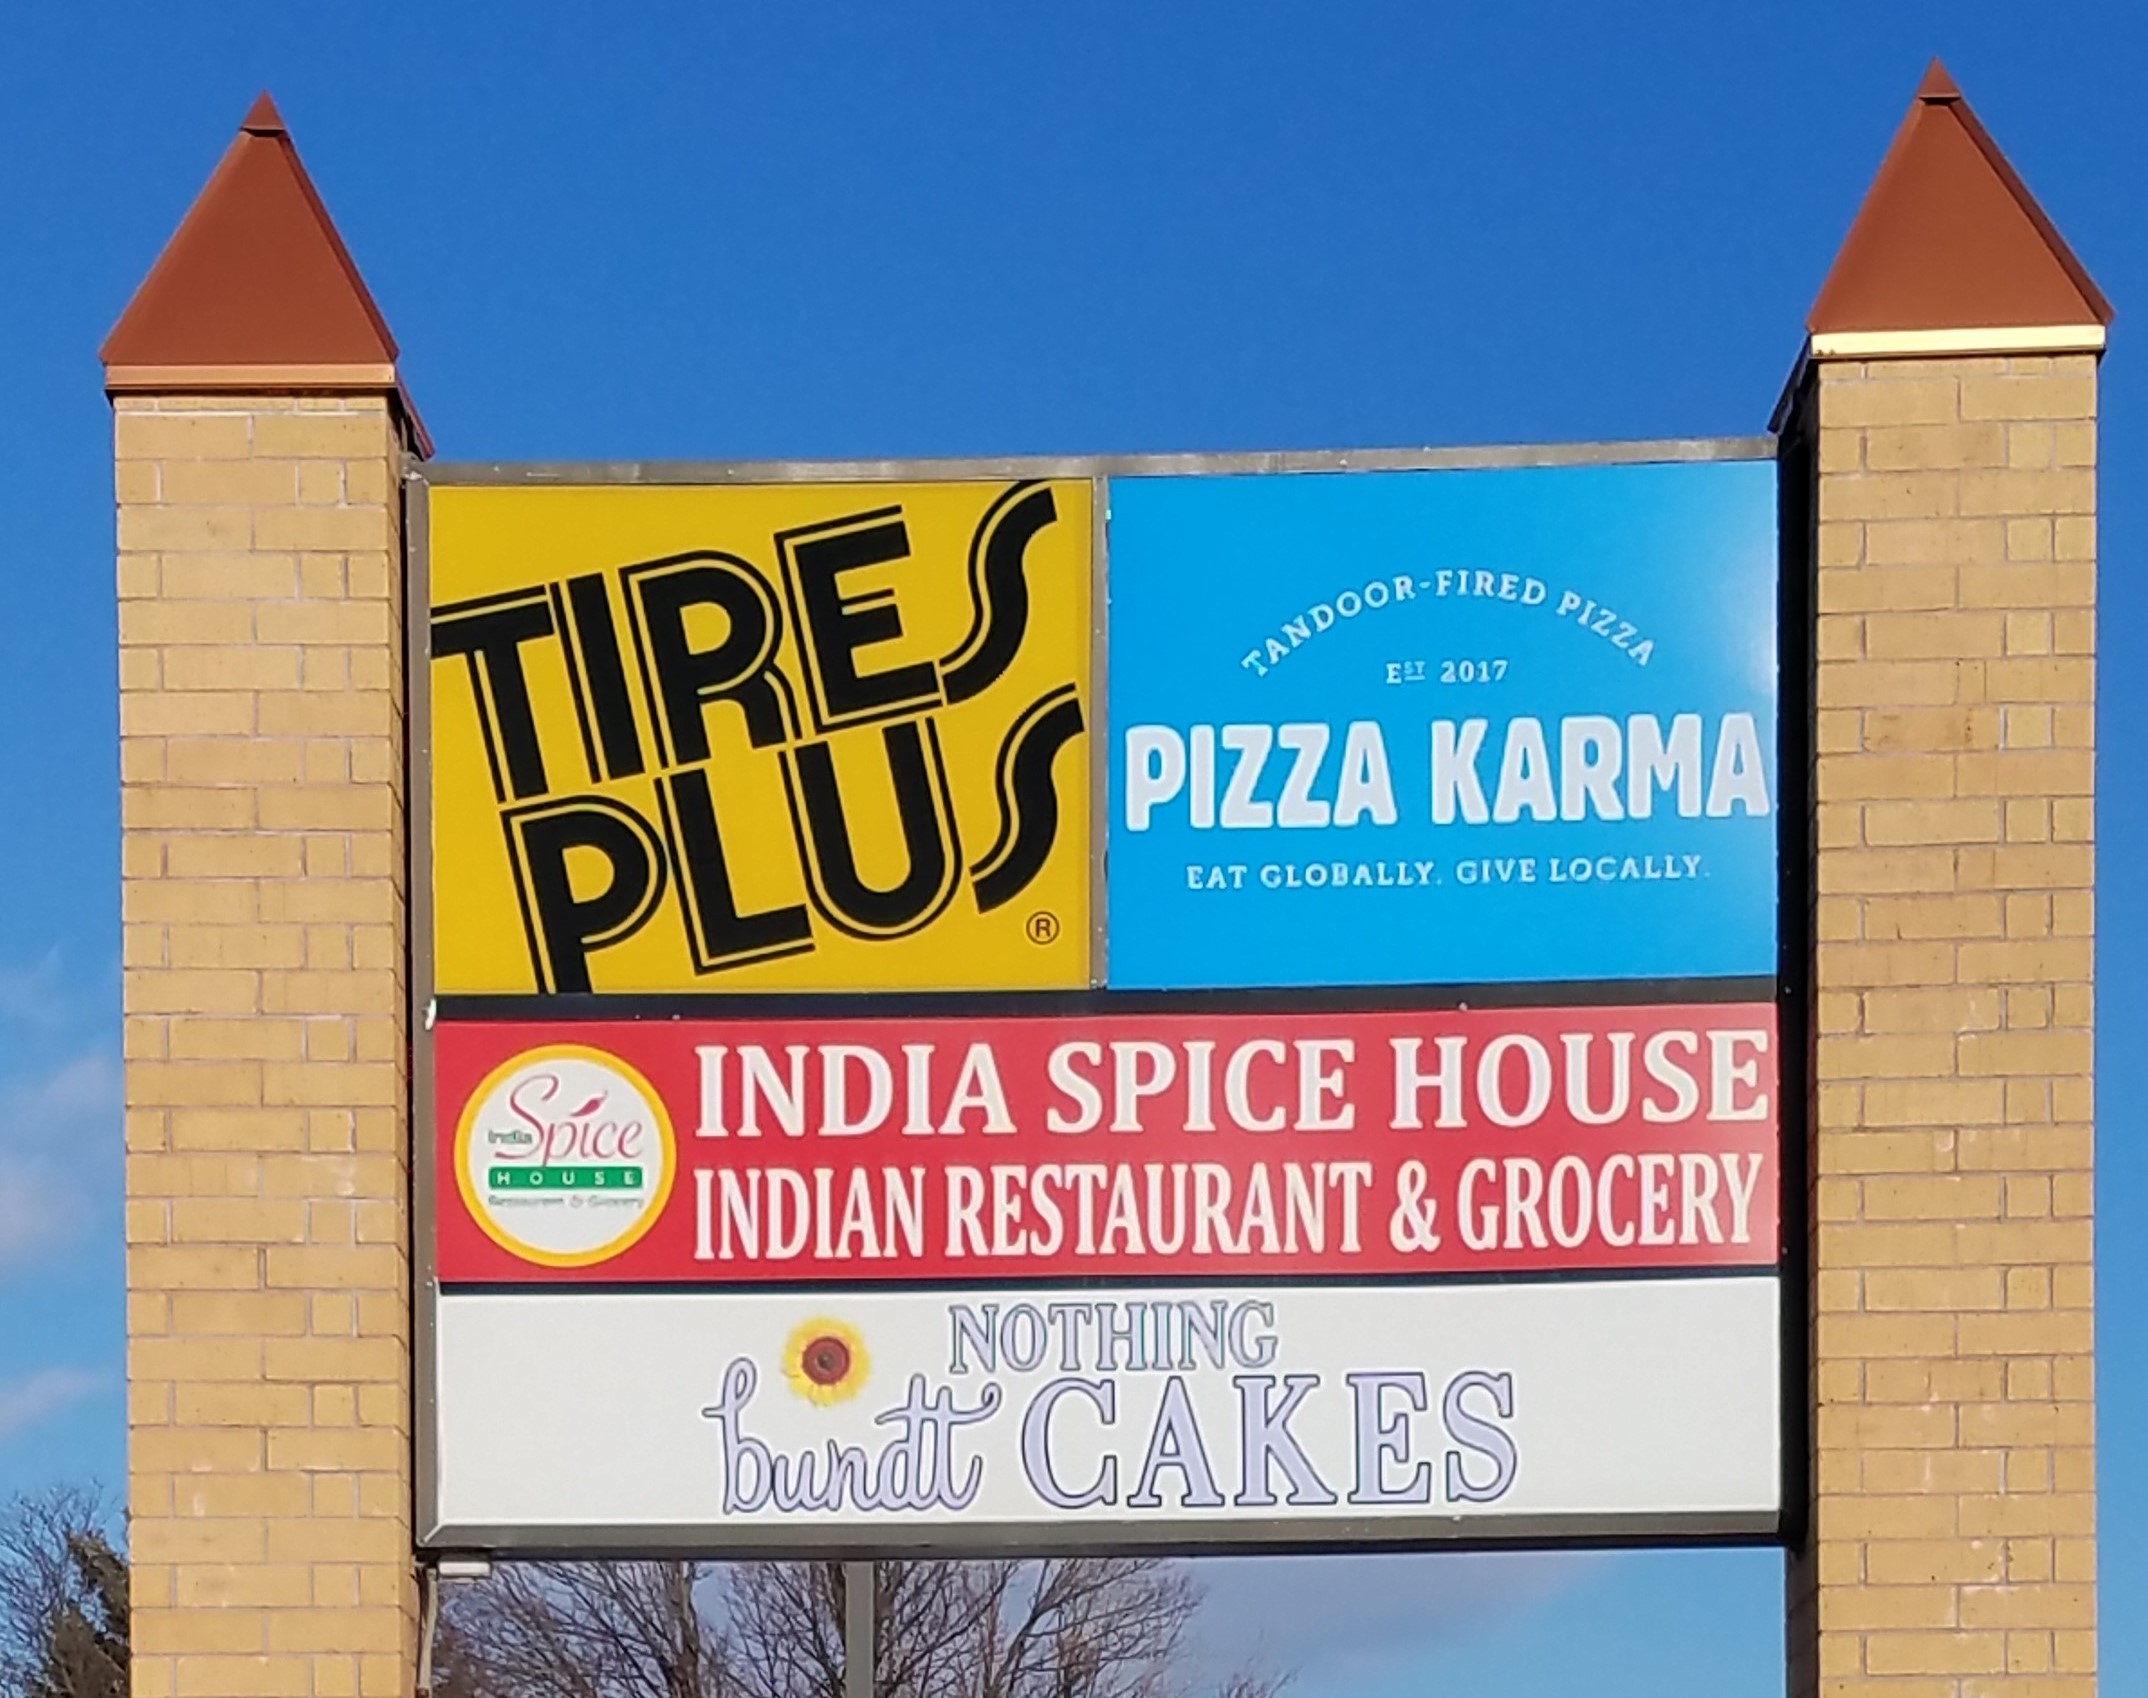 PIZZA KARMA – Restaurant Signage